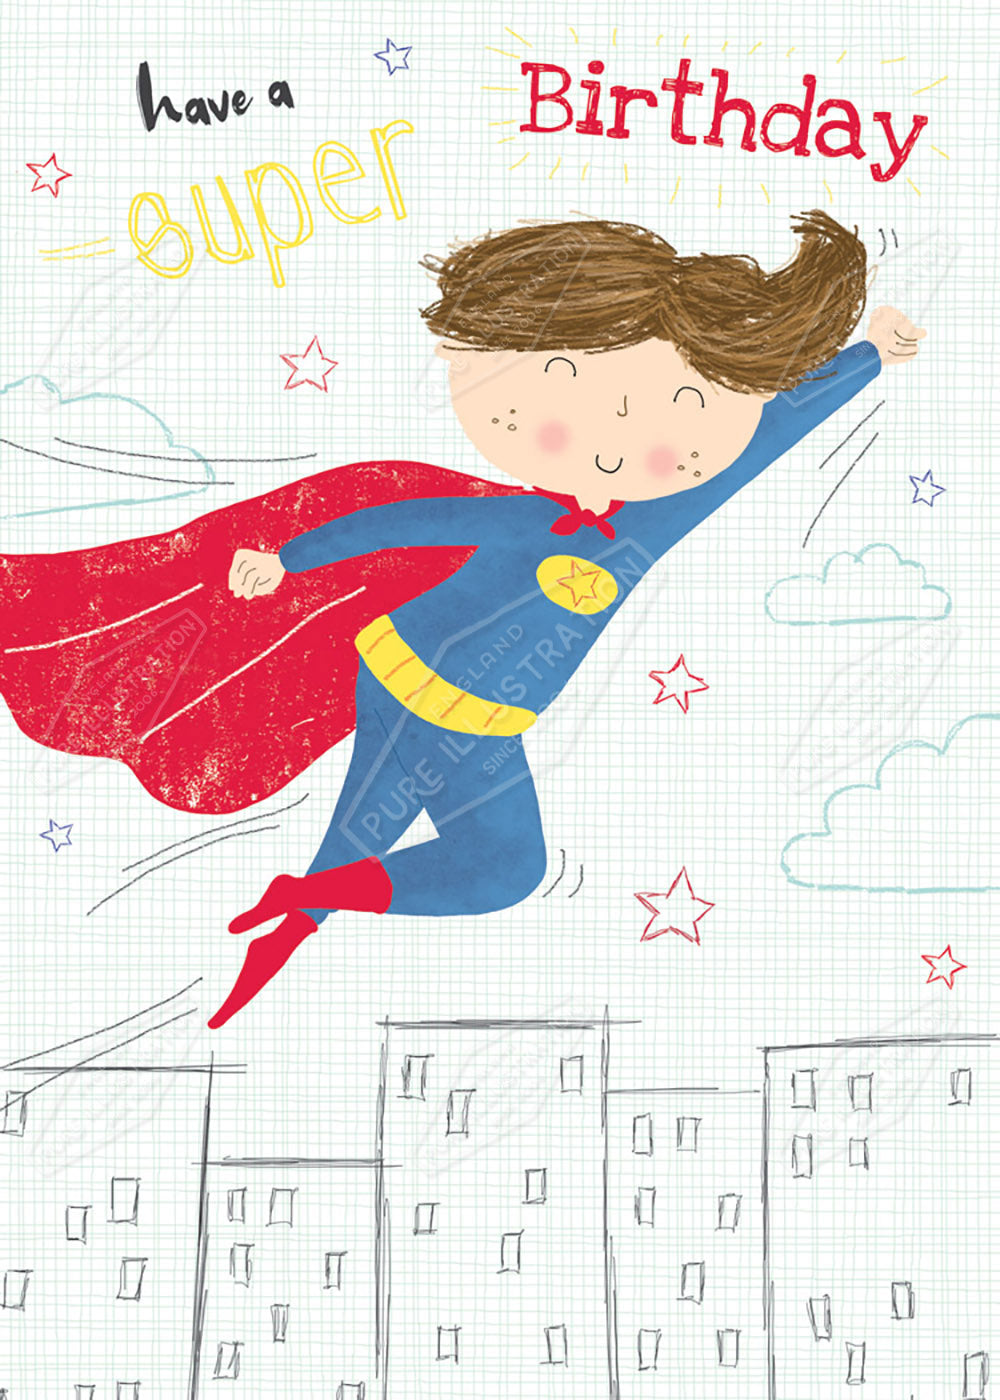 Superhero Birthday Greeting Card Design by Cory Reid for Pure Art Licensing Agency & Surface Design Studio